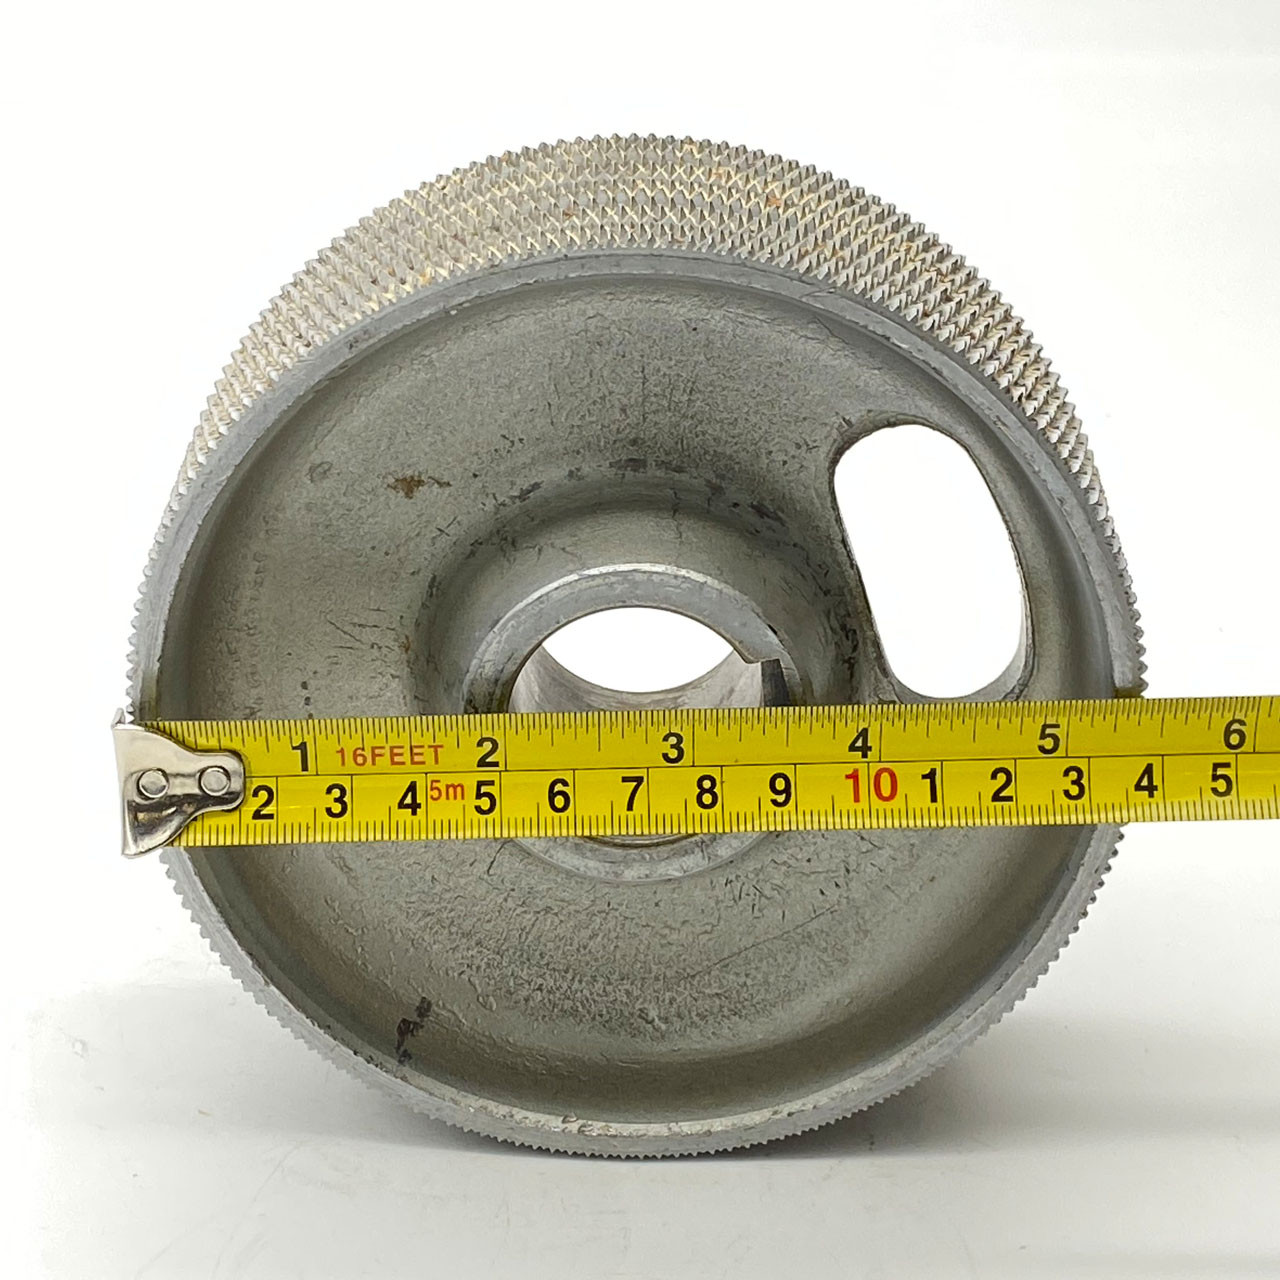 Used Steel Feed Roller w/Keyway 5.5" x 2" - 2